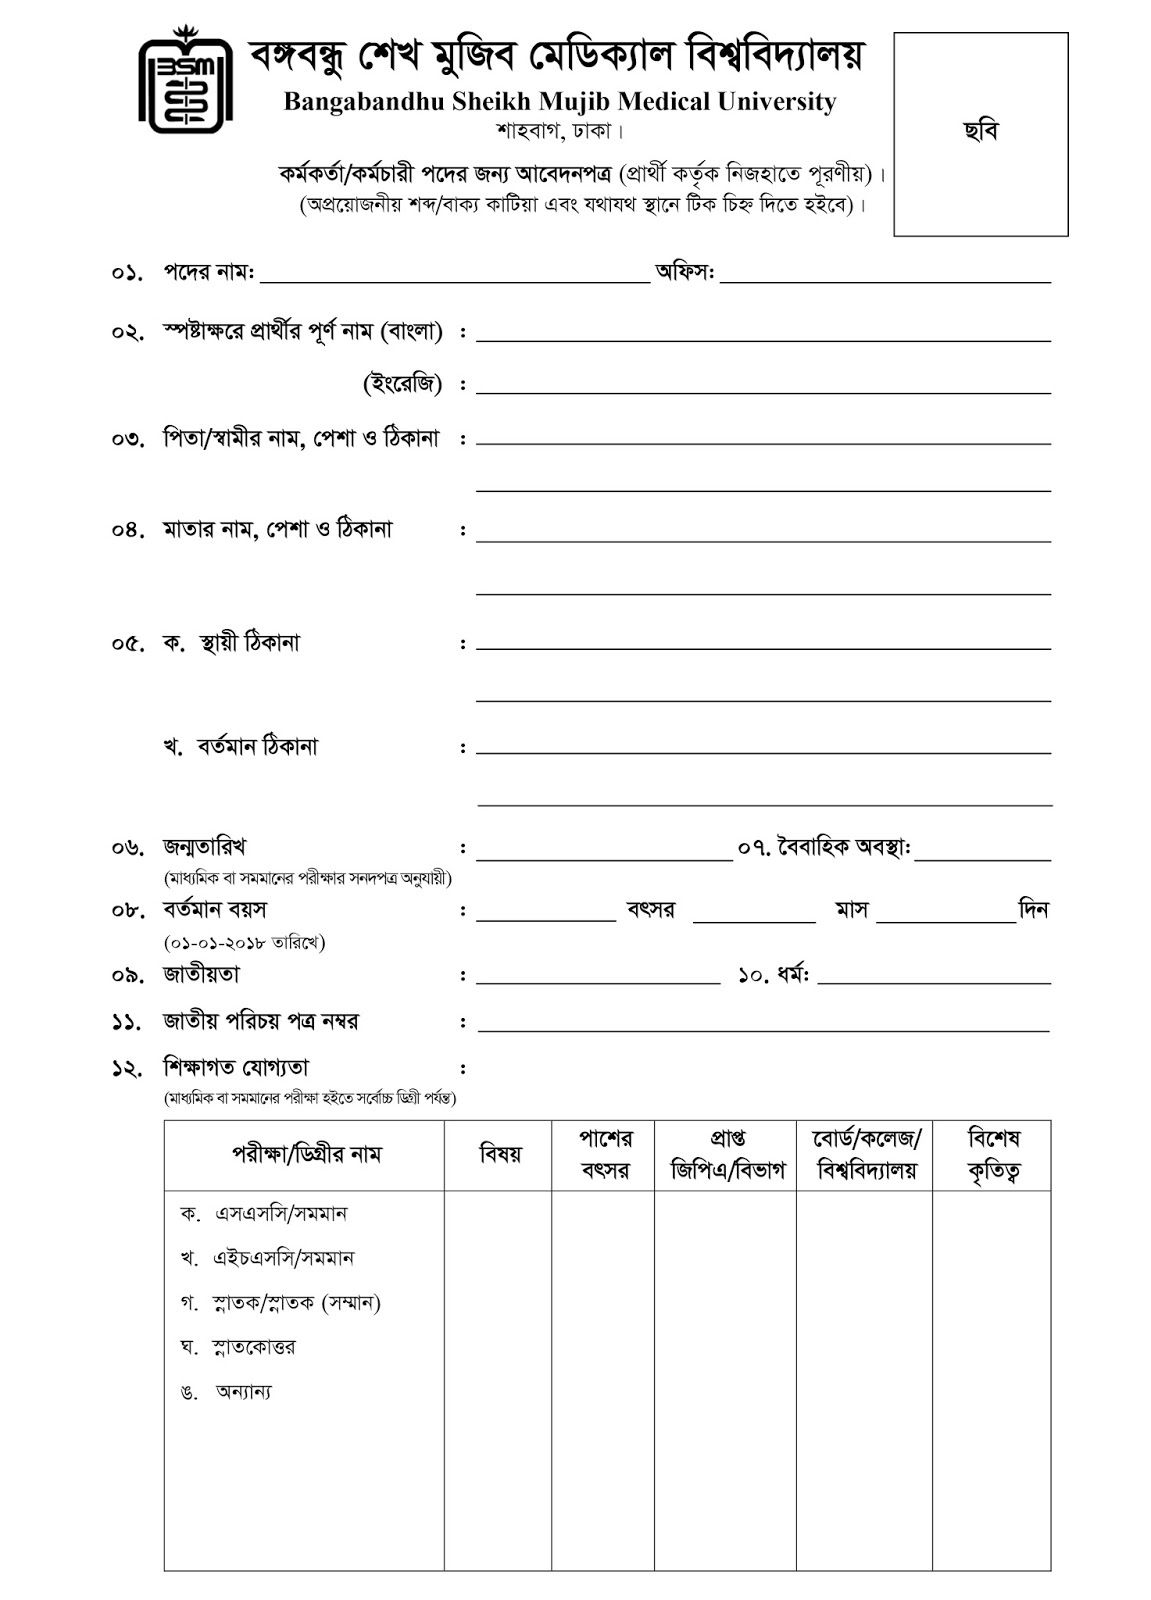 Bangabandhu Sheikh Mujib Medical University (BSMMU) Professor Recruitment Application Form